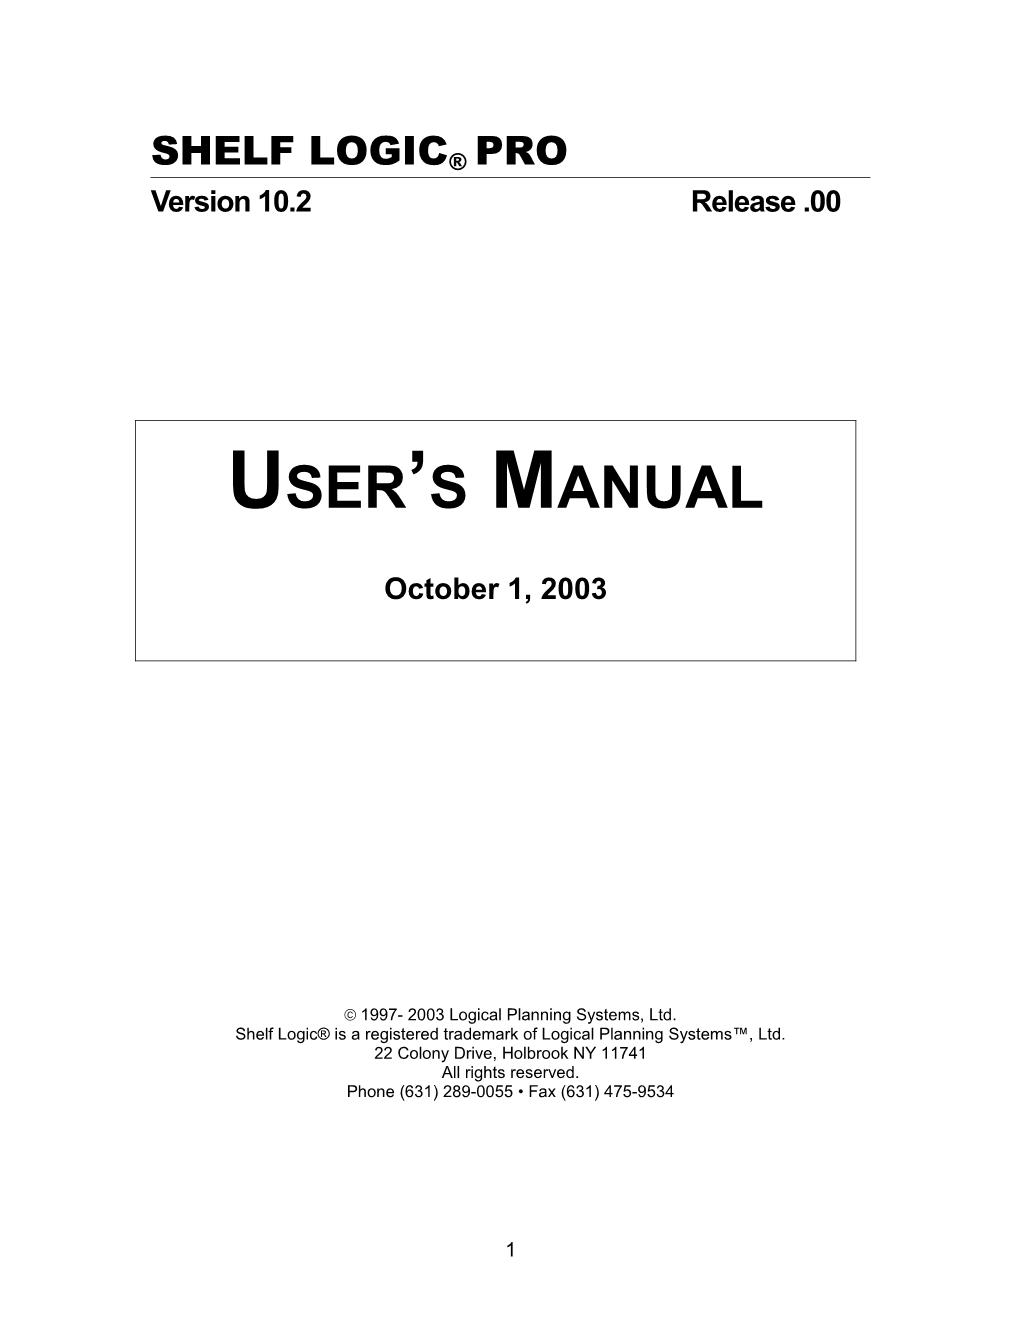 Shelf Logic Master Edition